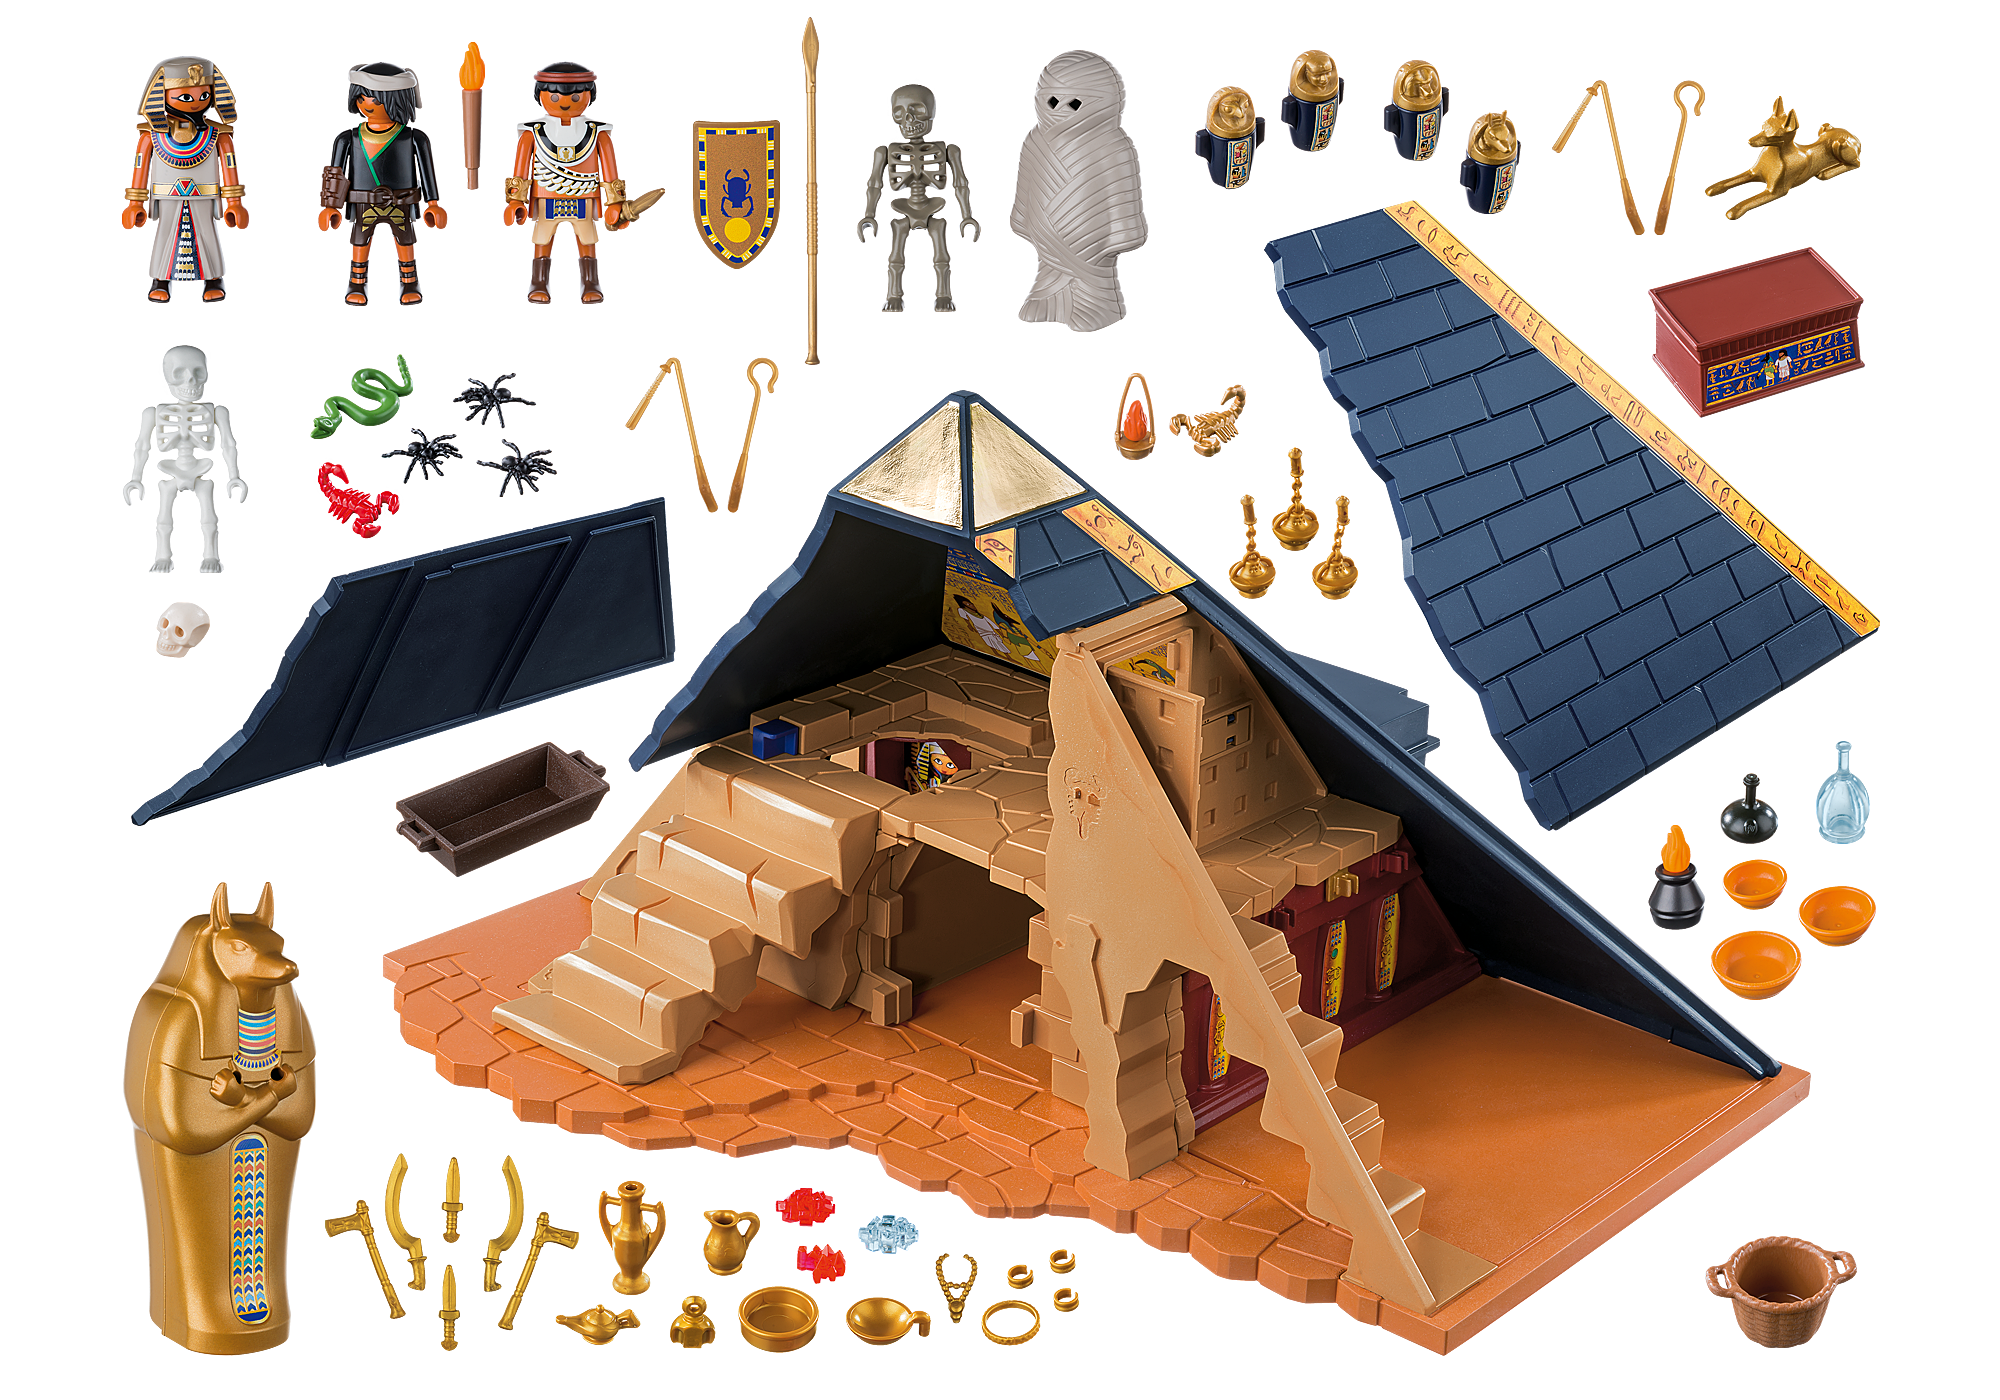 PLAYMOBIL Pharaoh's Pyramid 